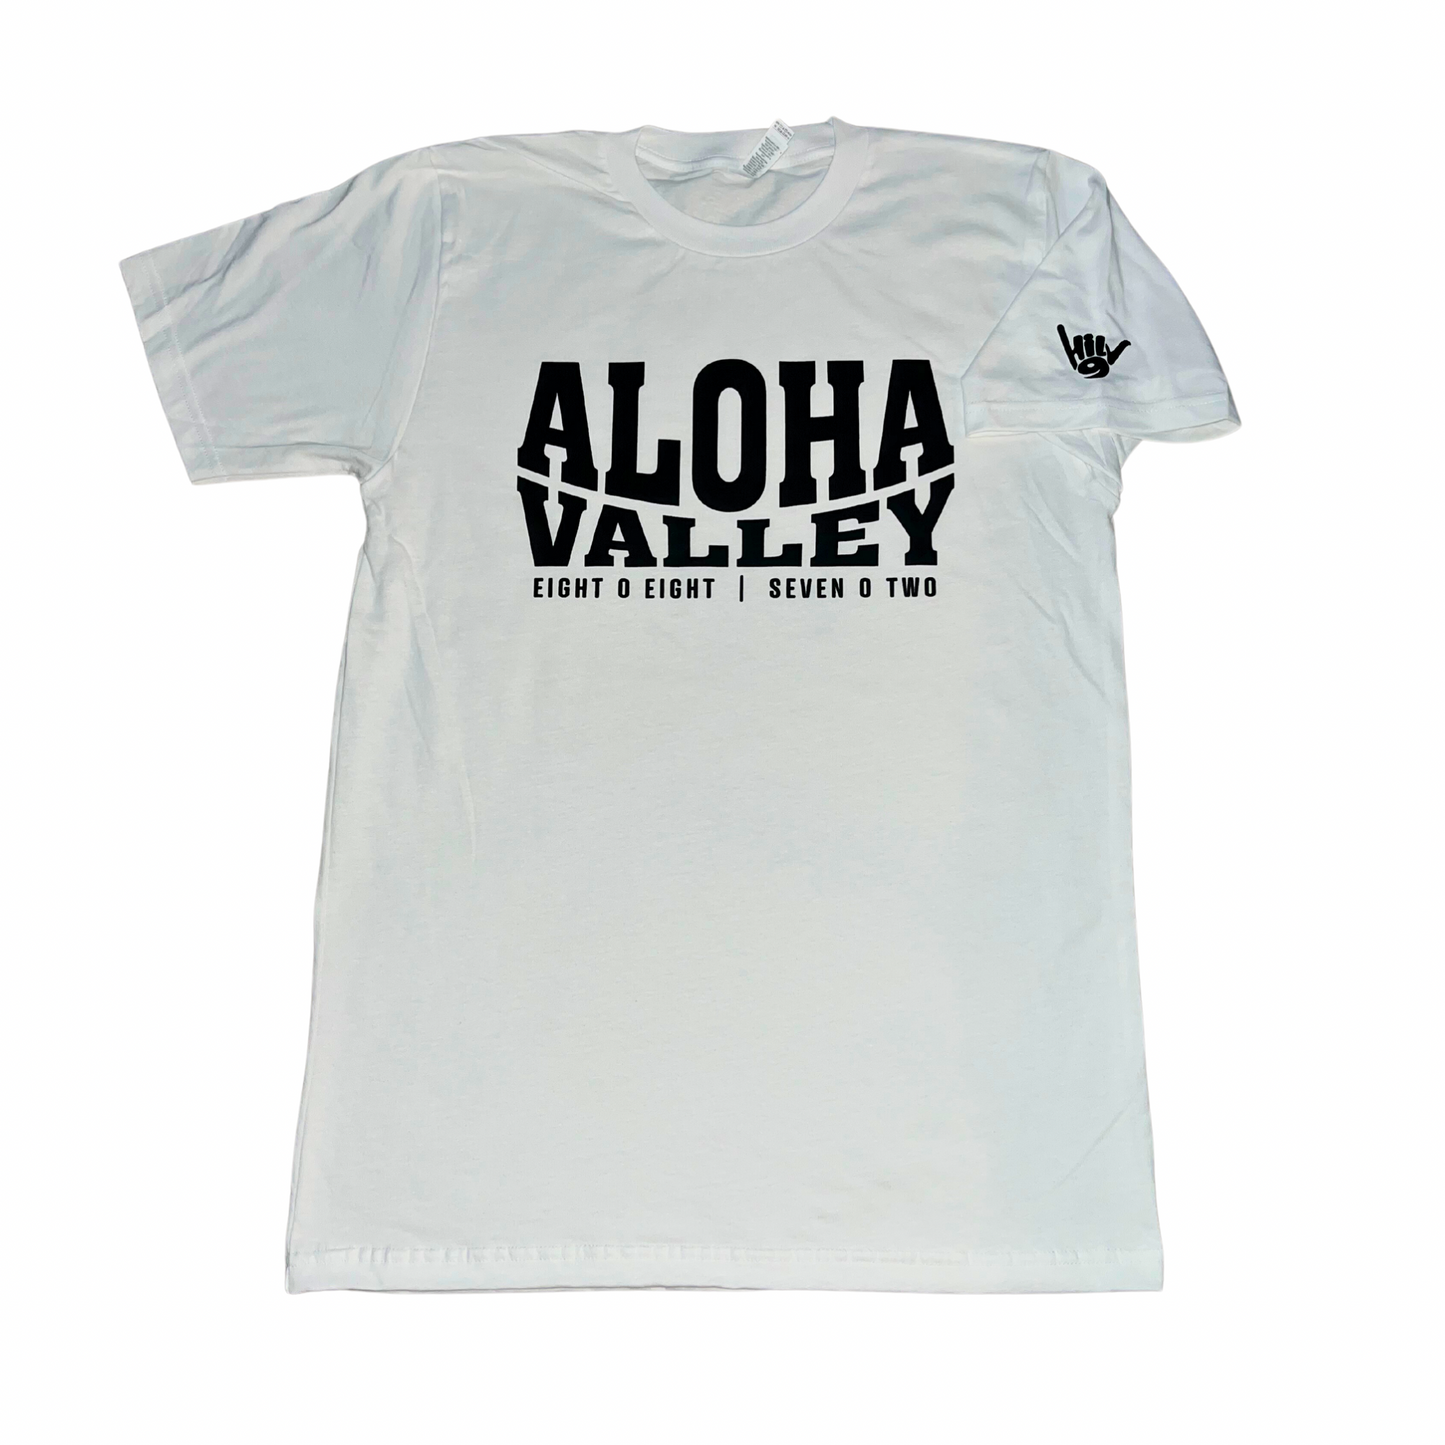 HILV9 Aloha Valley White and Black Shirt